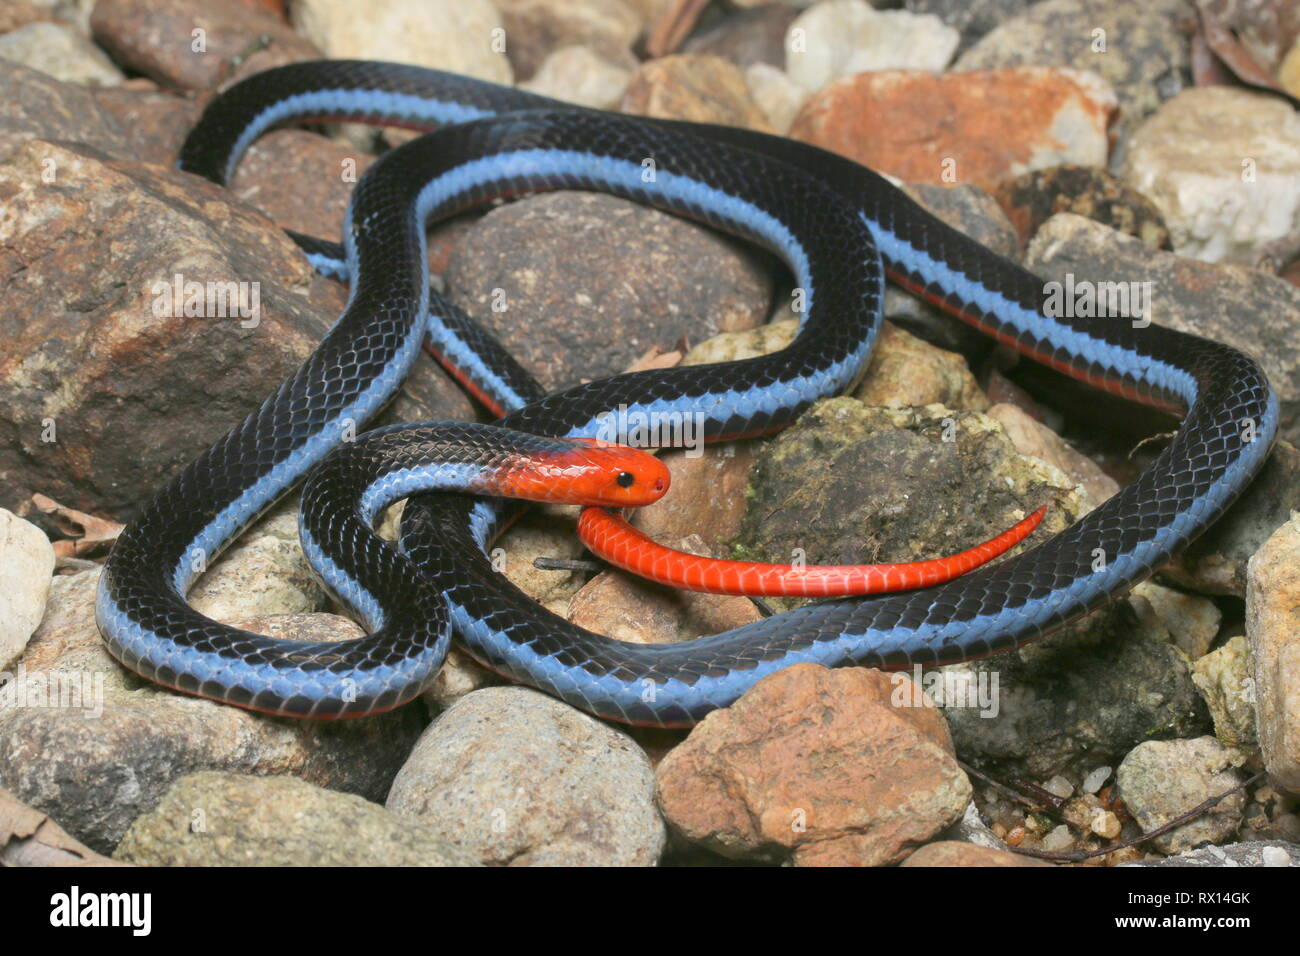 Malayan Blue Coral Snake Stock Photo